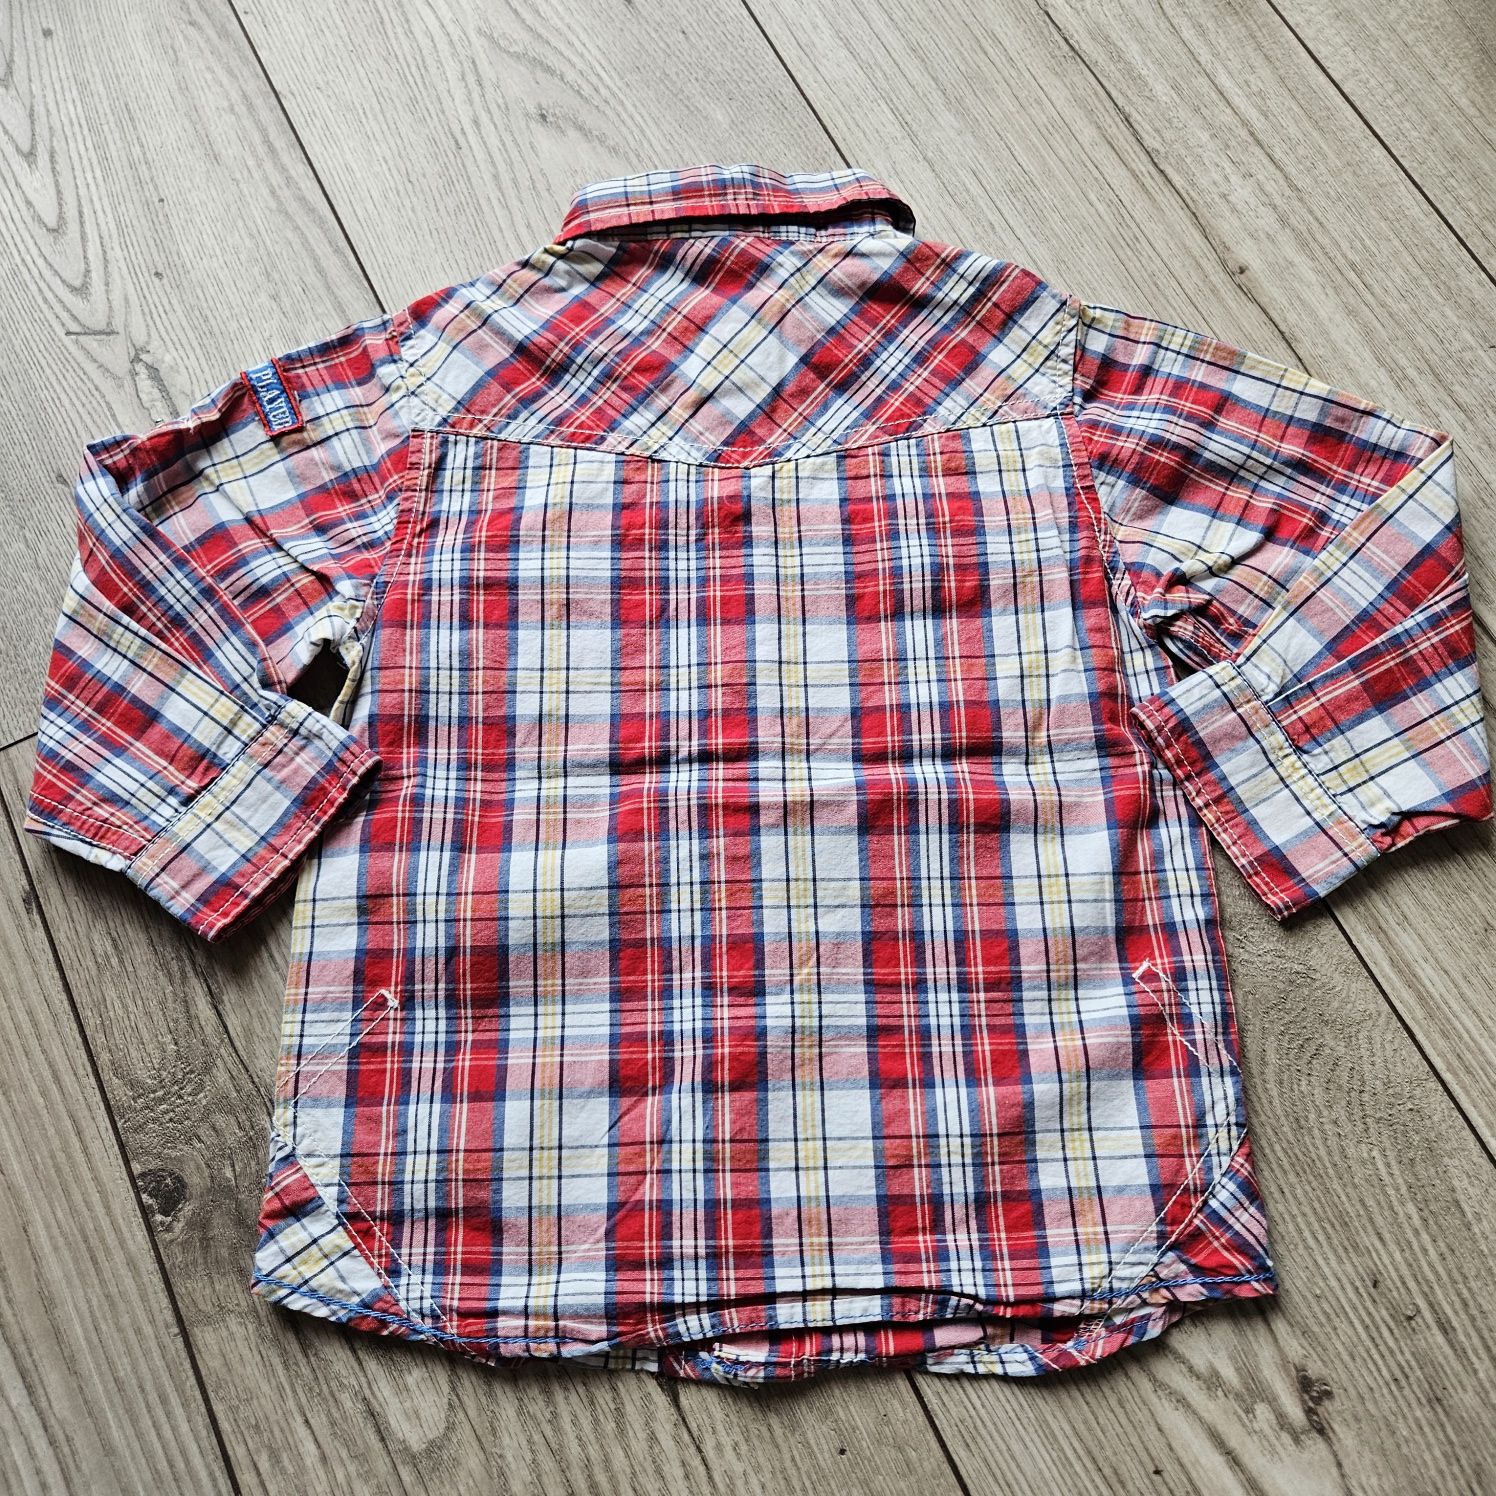 Koszula chłopięca w kratę KappAhl r. 86-92 cm